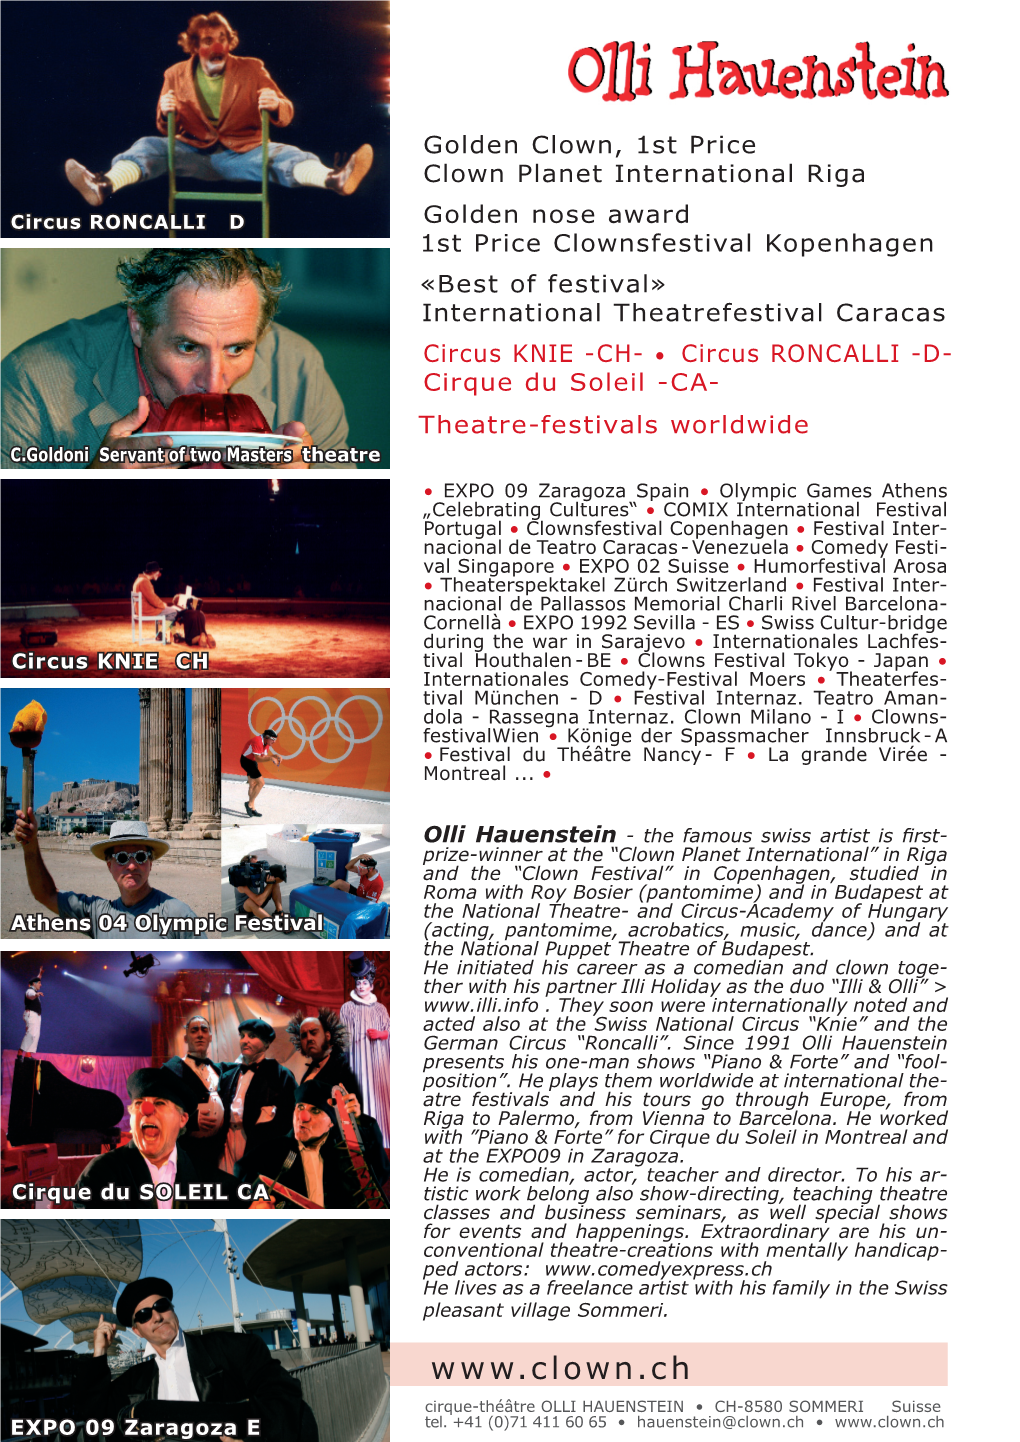 Cirque-Théâtre OLLI HAUENSTEIN • CH-8580 SOMMERI Suisse EXPO 09 Zaragoza E Tel